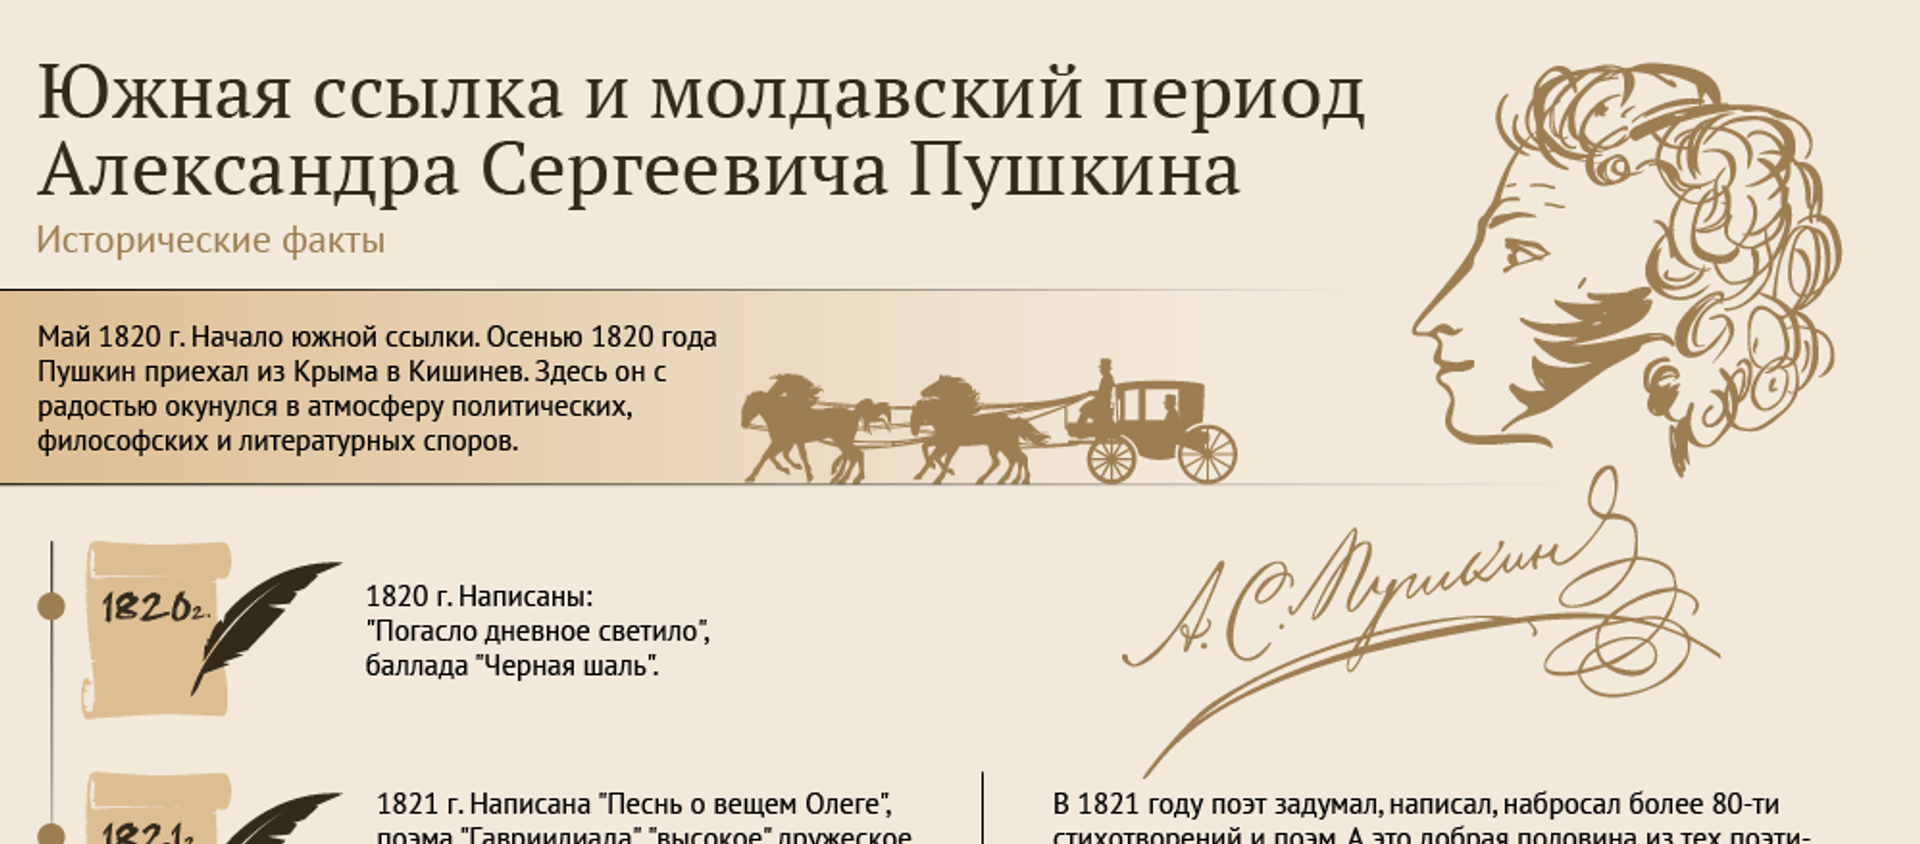 Пушкин - Sputnik Молдова, 1920, 06.06.2021